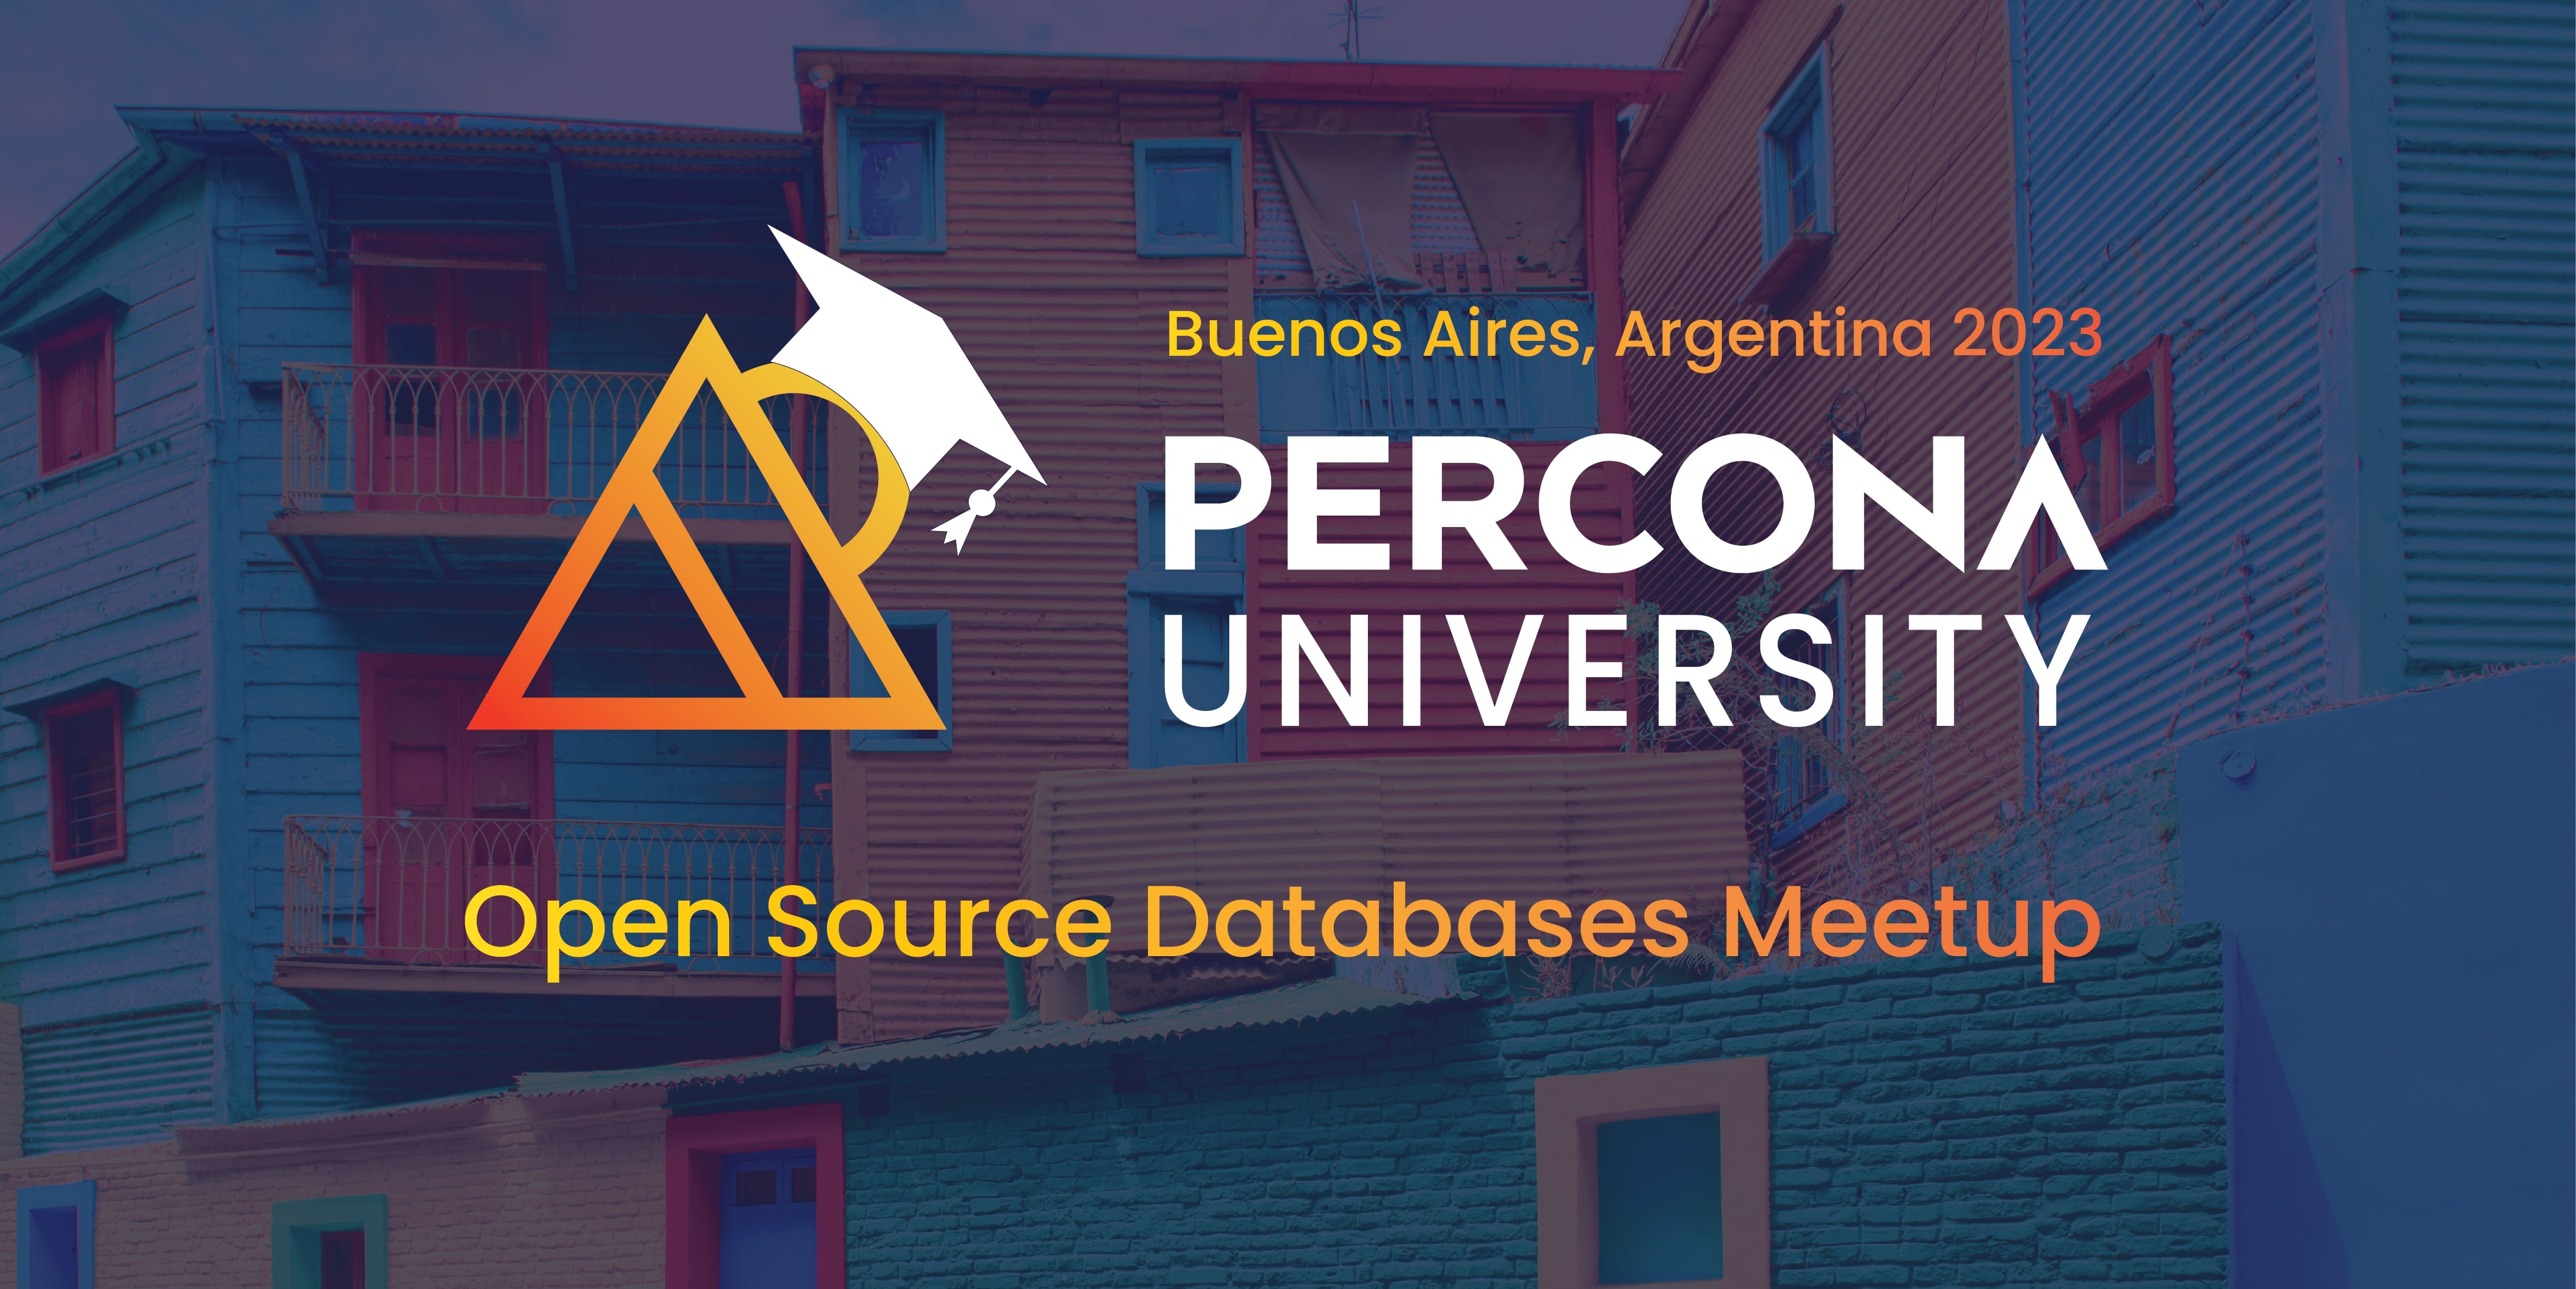 Percona University Buenos Aires